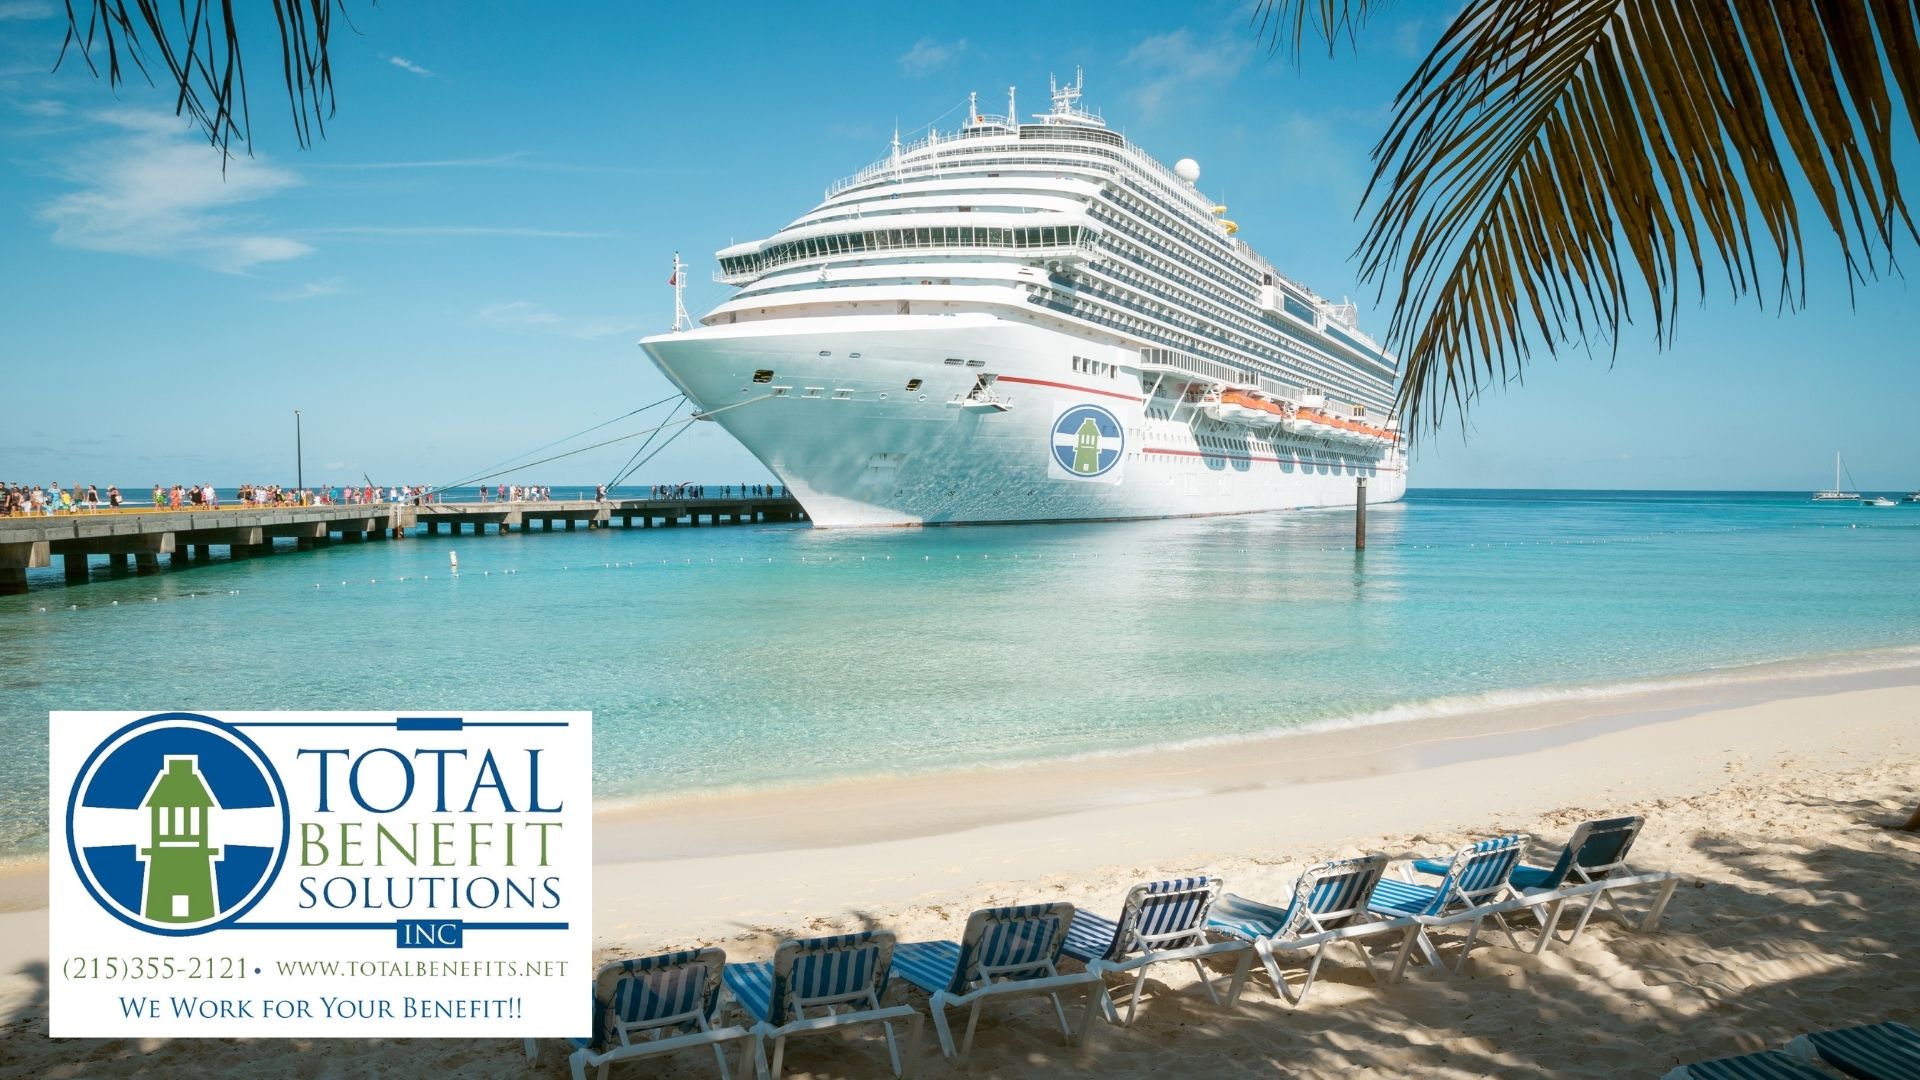 royal caribbean cruise insurance cost